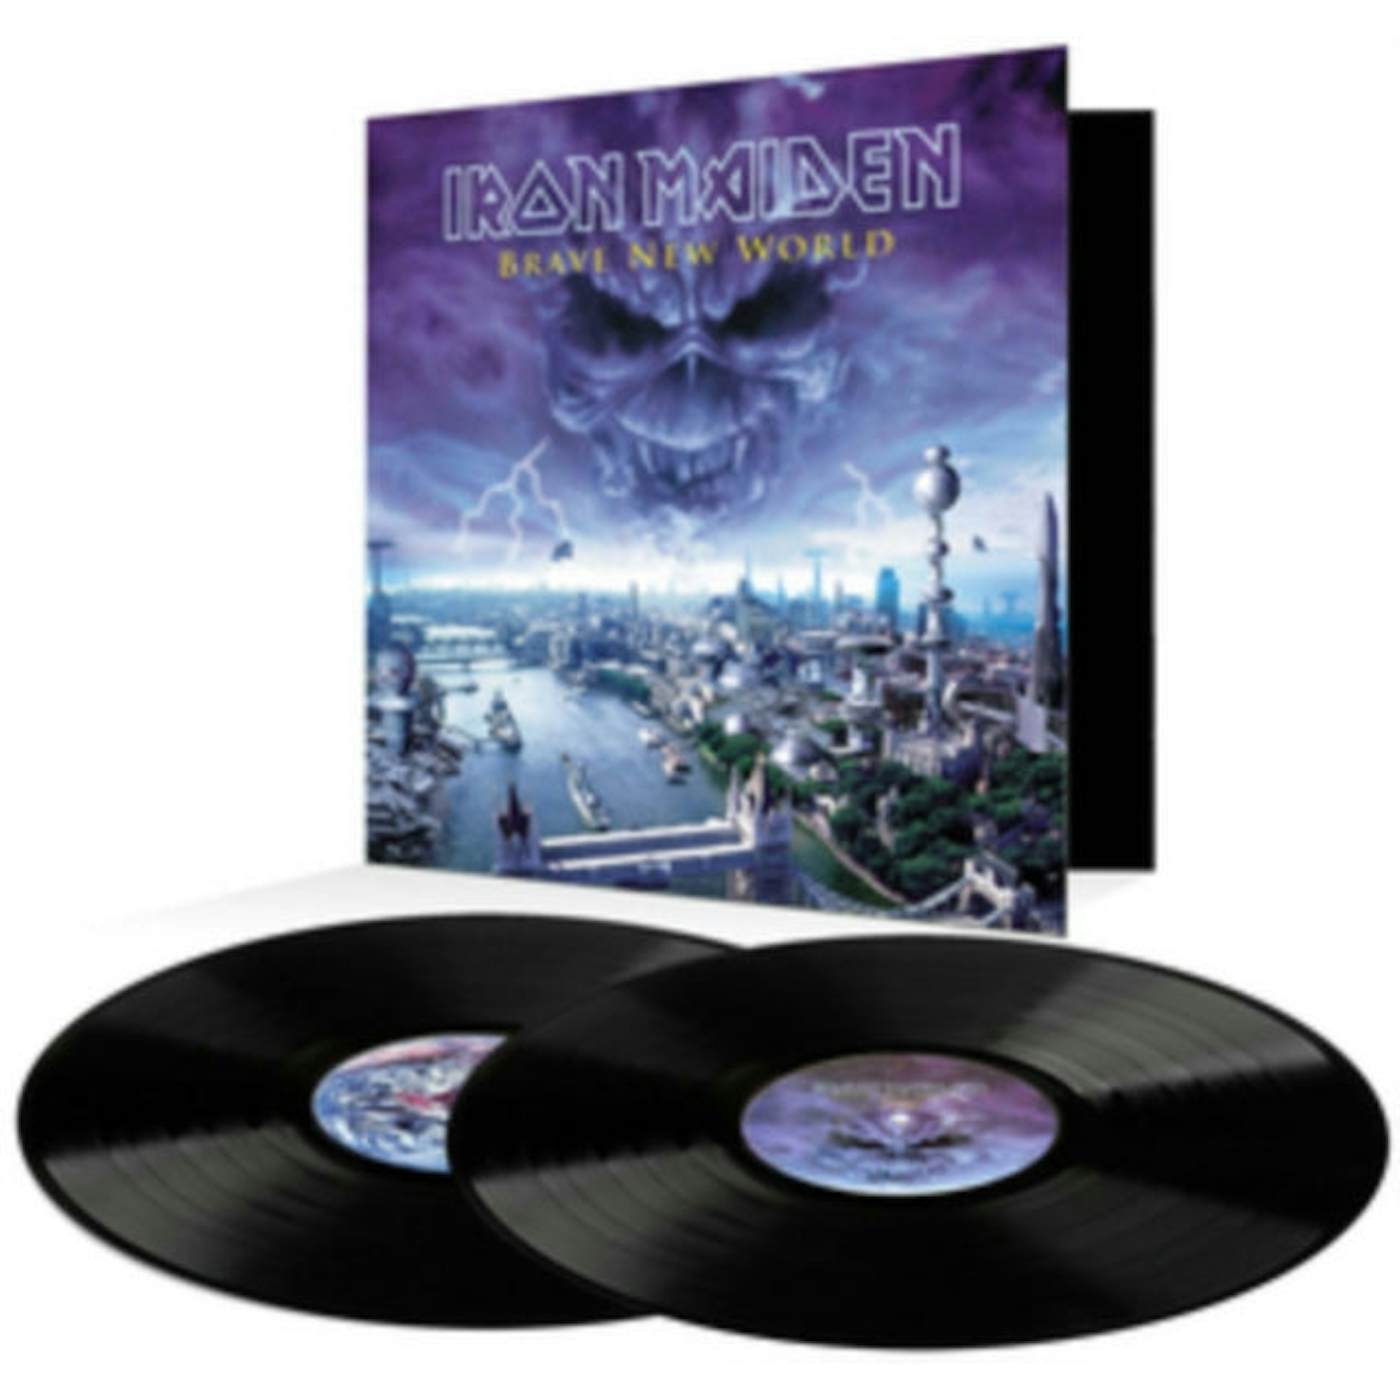 Iron Maiden LP Vinyl Record - Brave New World